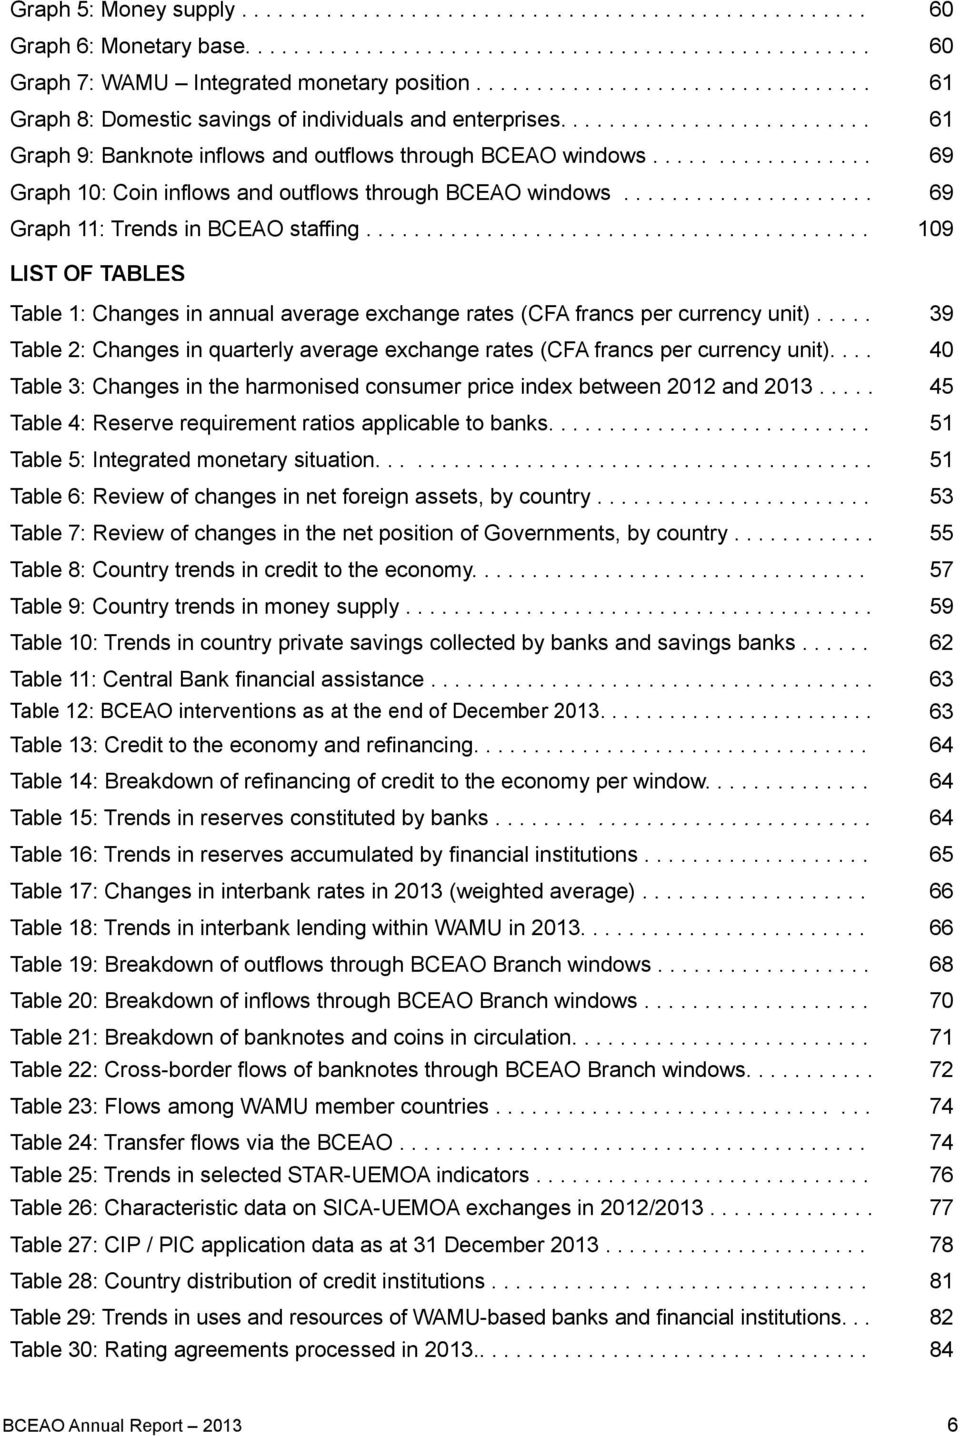 2013 Annual Report Summarised Version Pdf Free Download